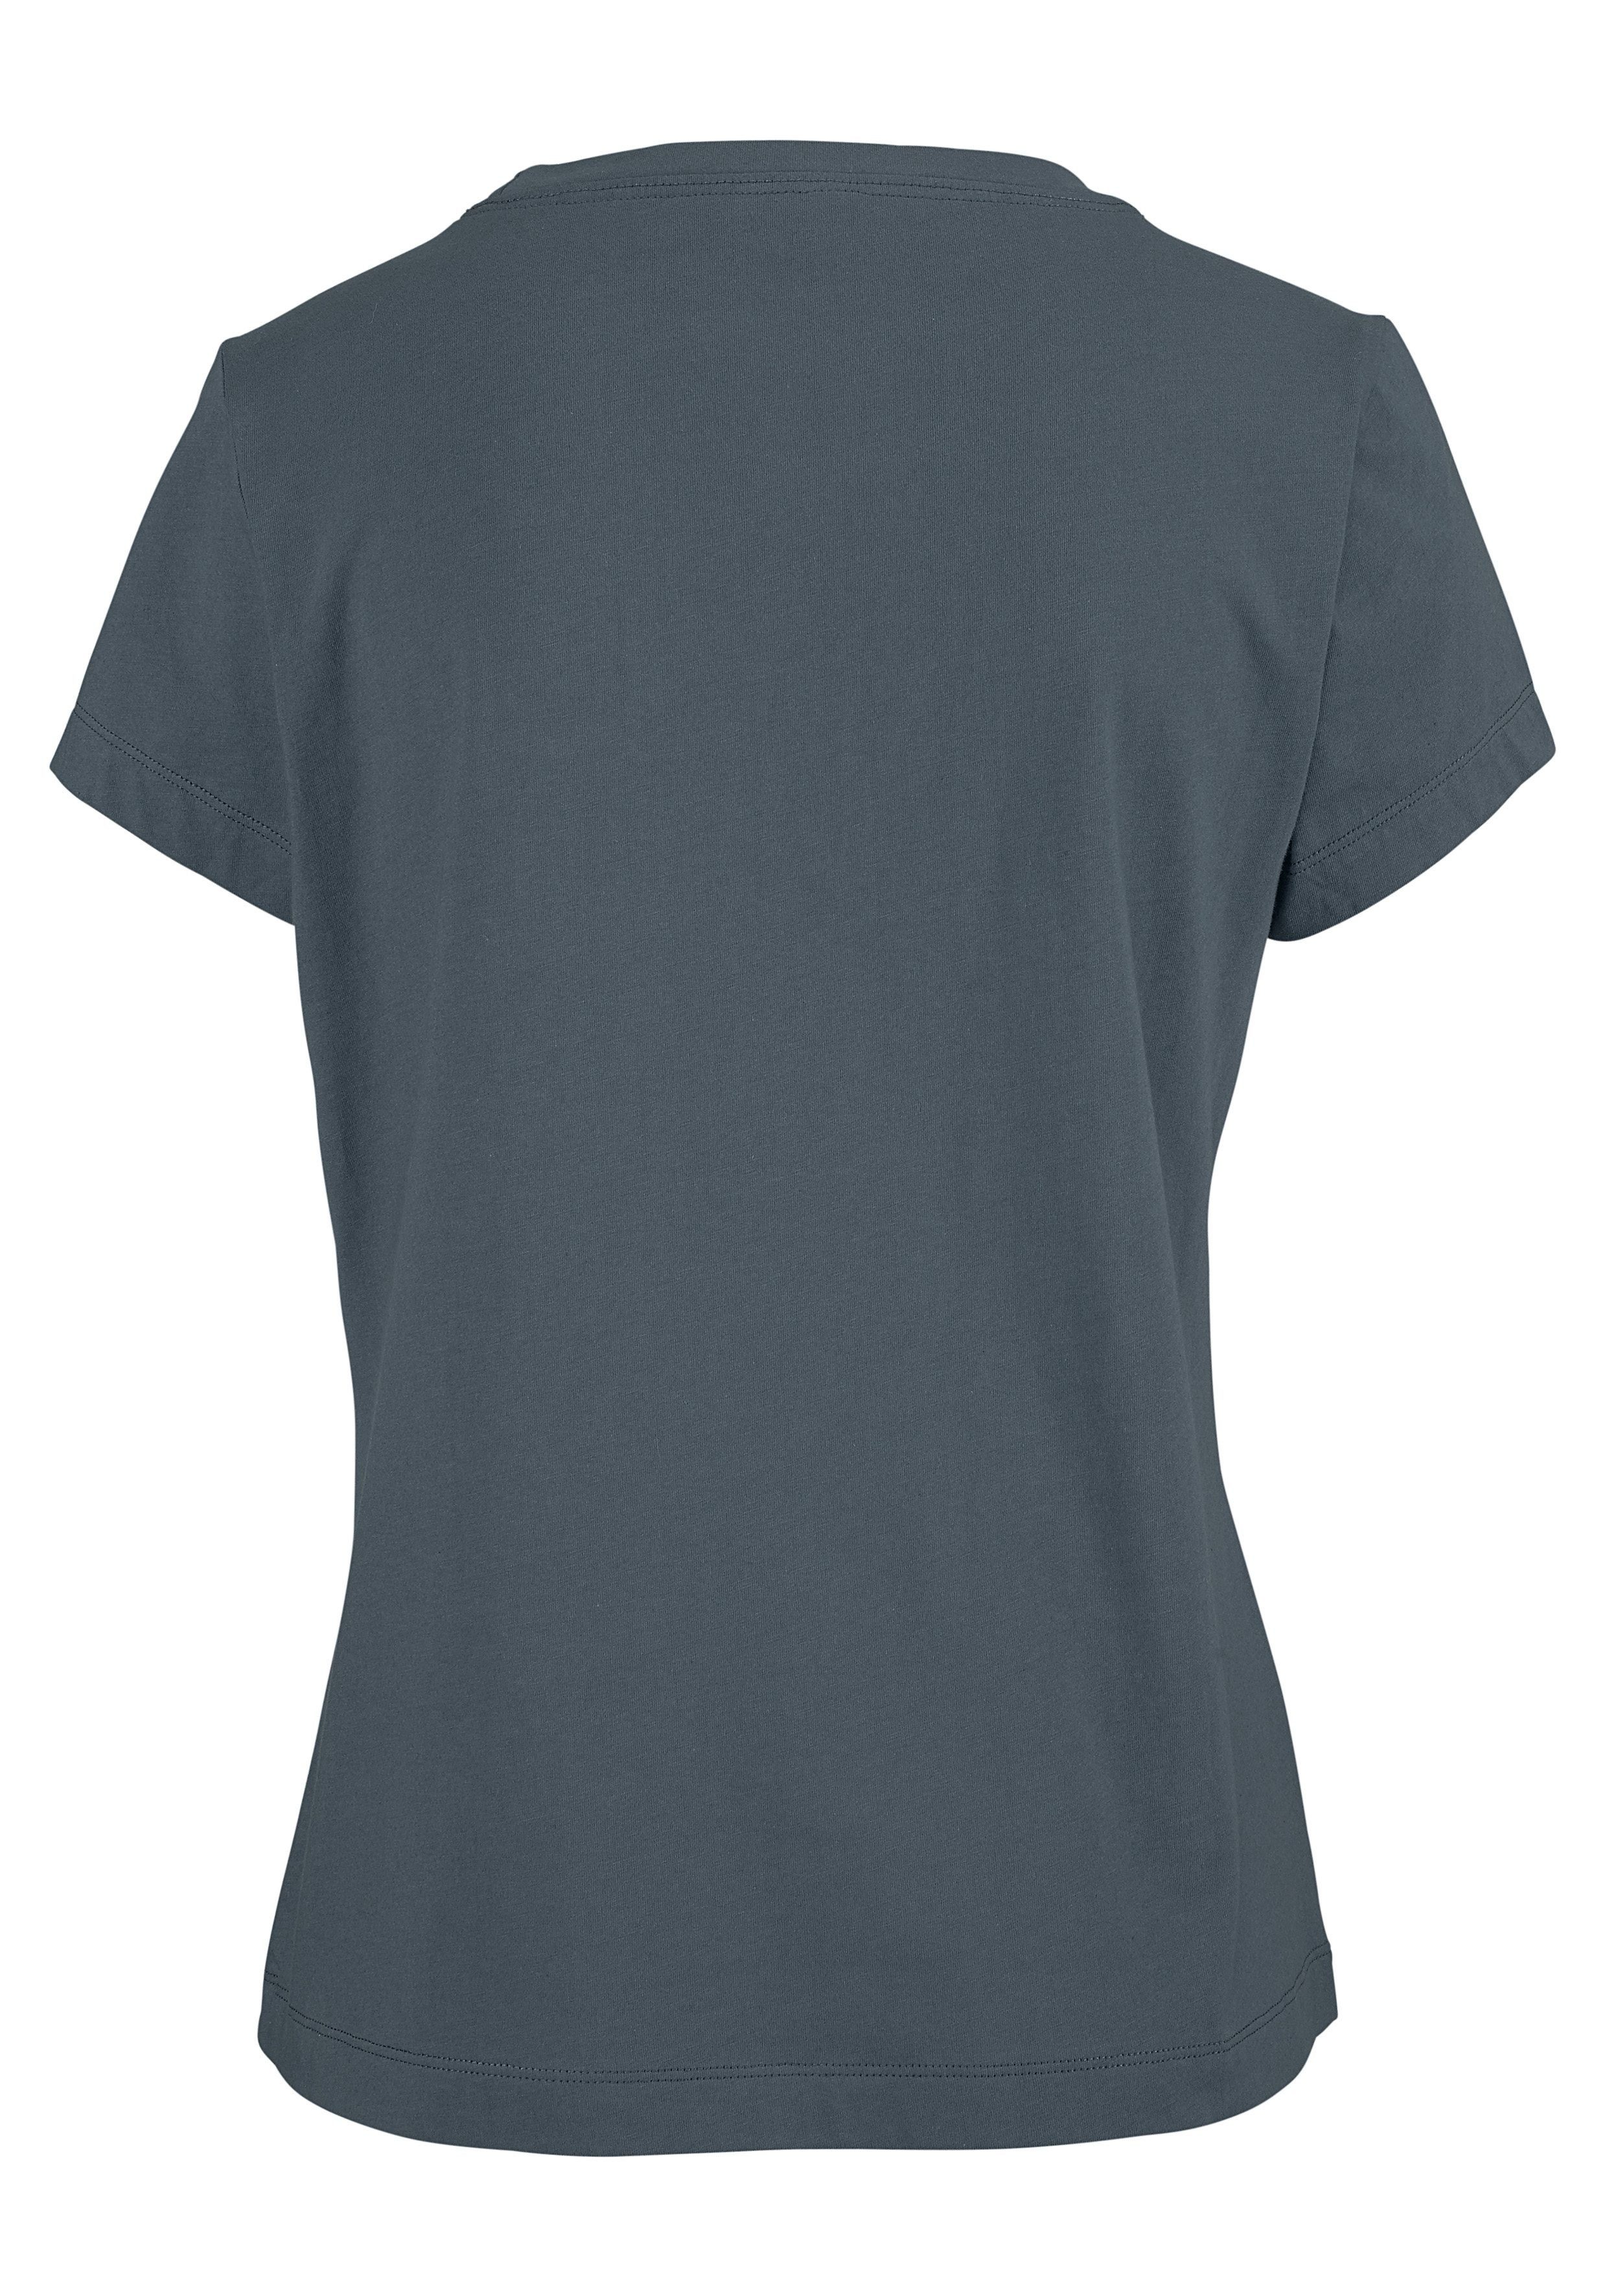 gemusterter Buffalo und grau-gemustert Basic Shorty tlg., Stück) Shorts mit (2 T-Shirt 1 softem